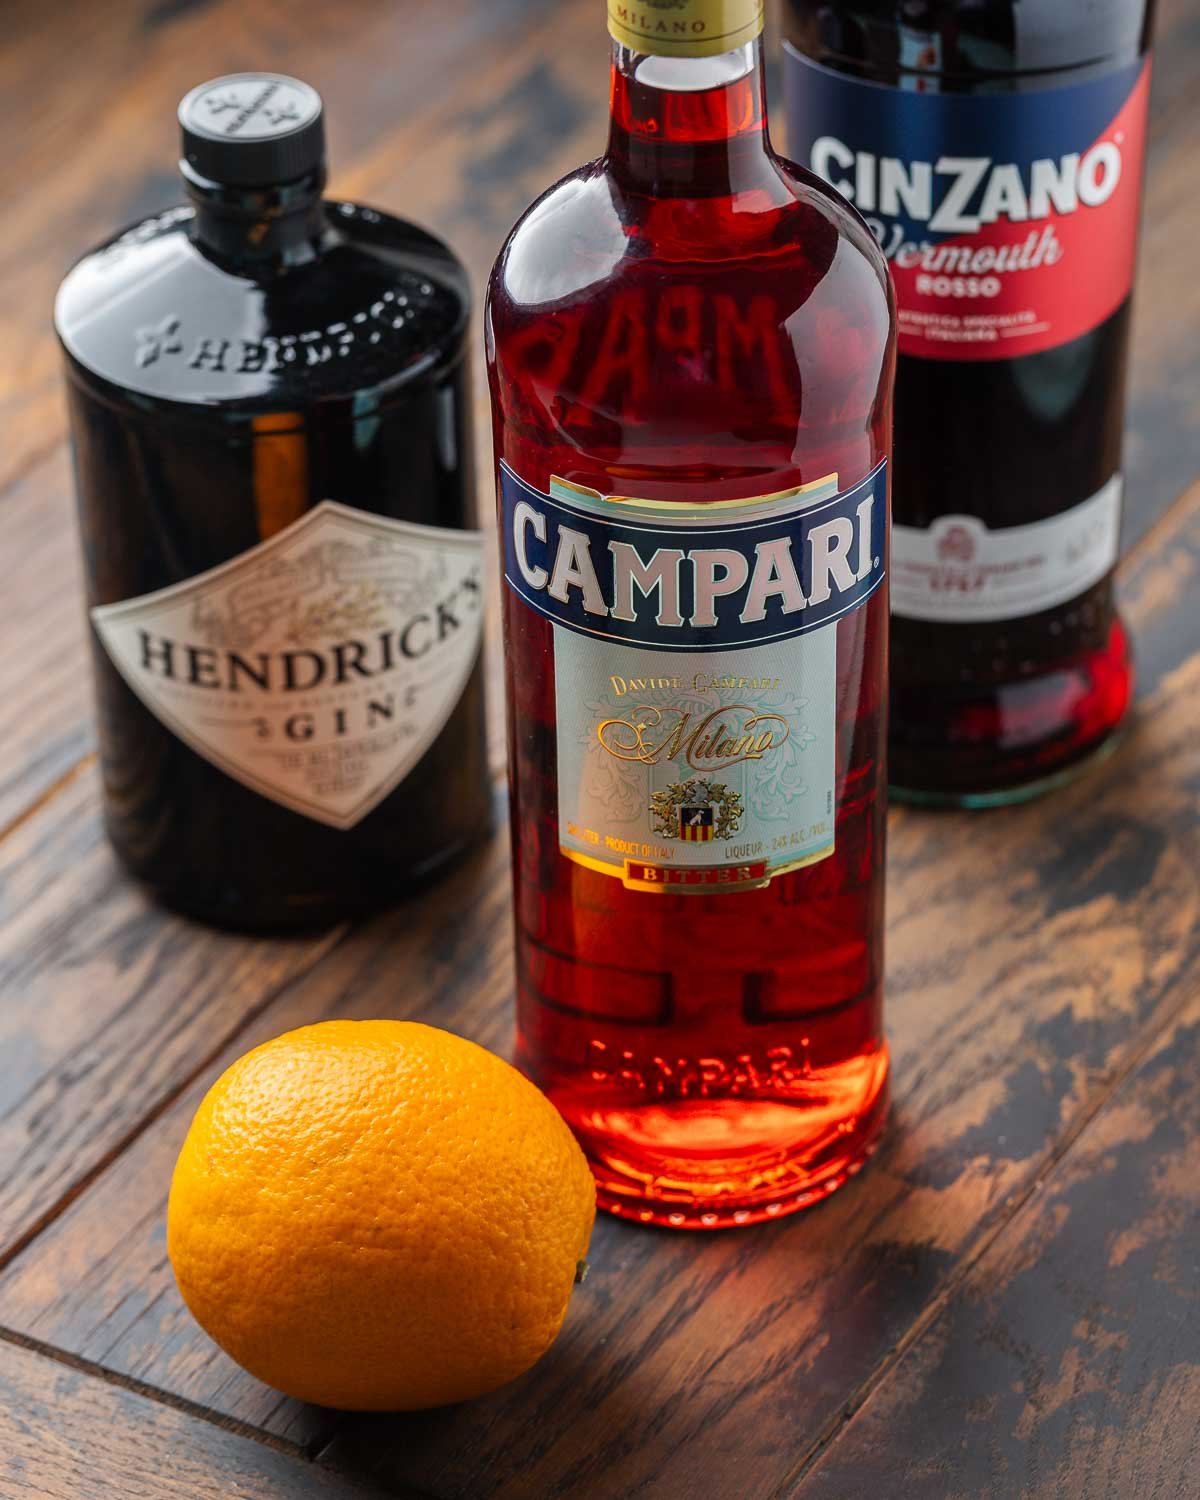 Ingredients shown: gin, Campari, sweet vermouth, and one orange.